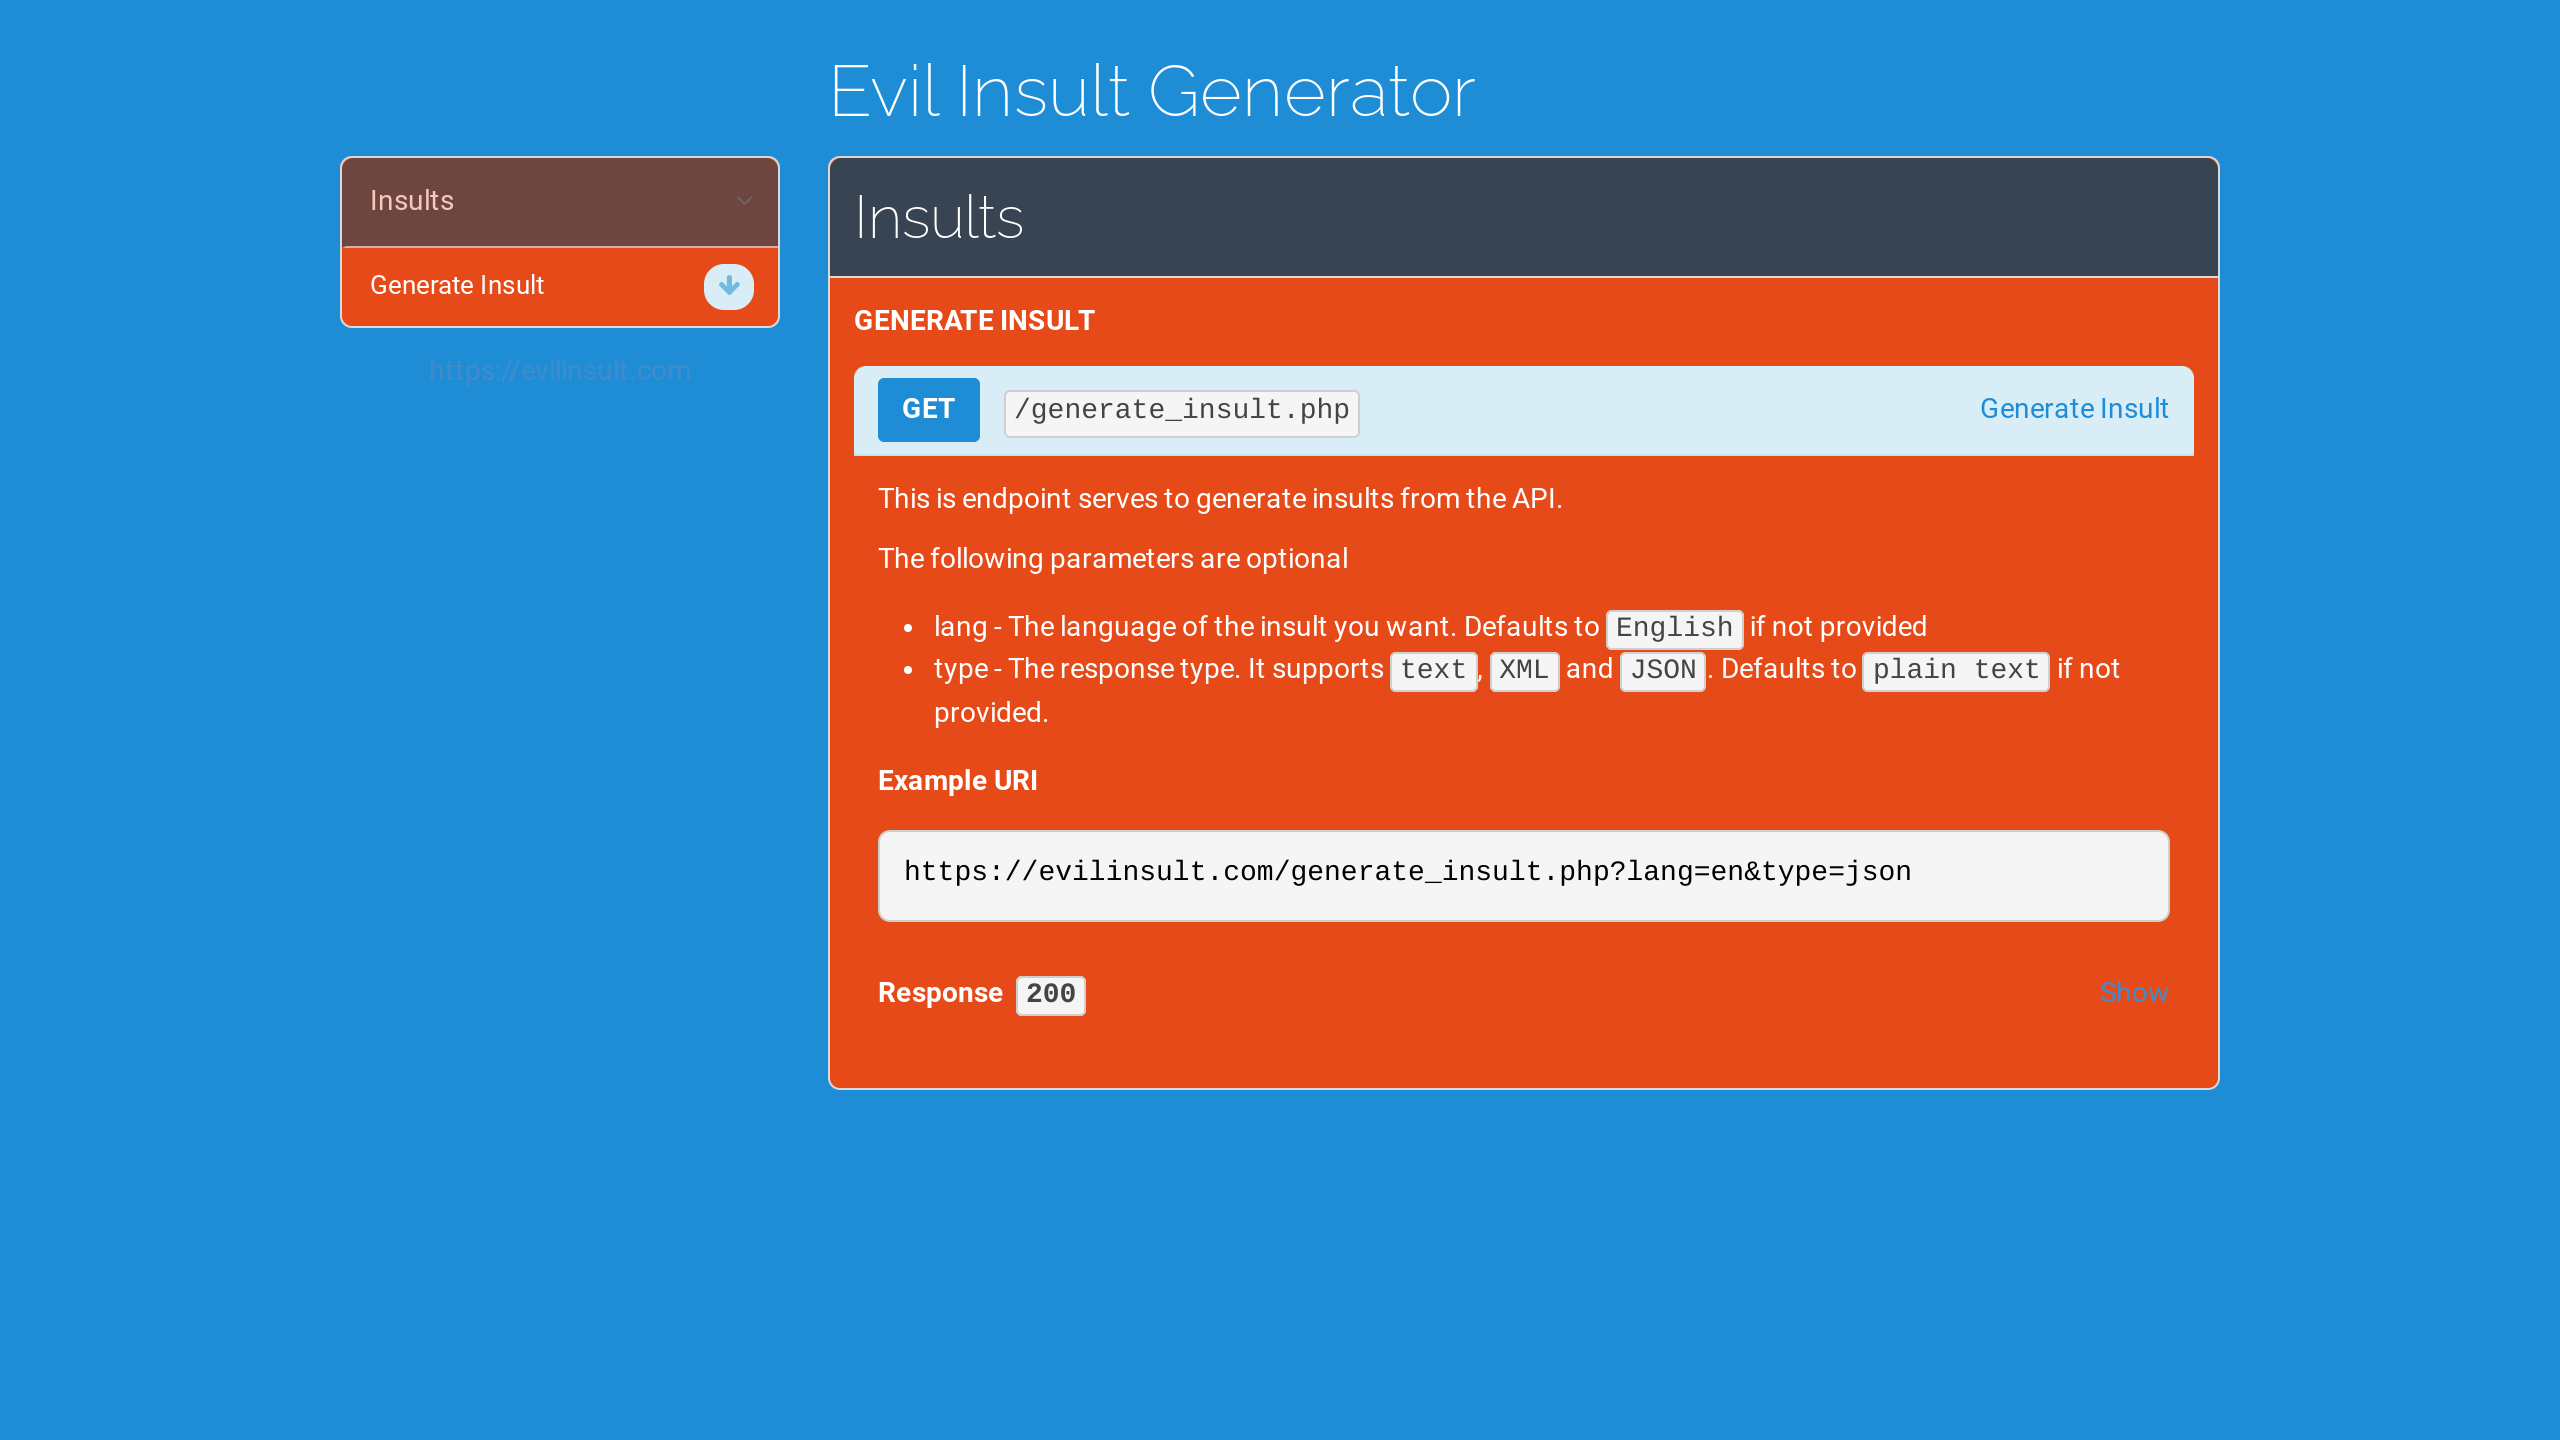 Evil Insult Generator's website screenshot